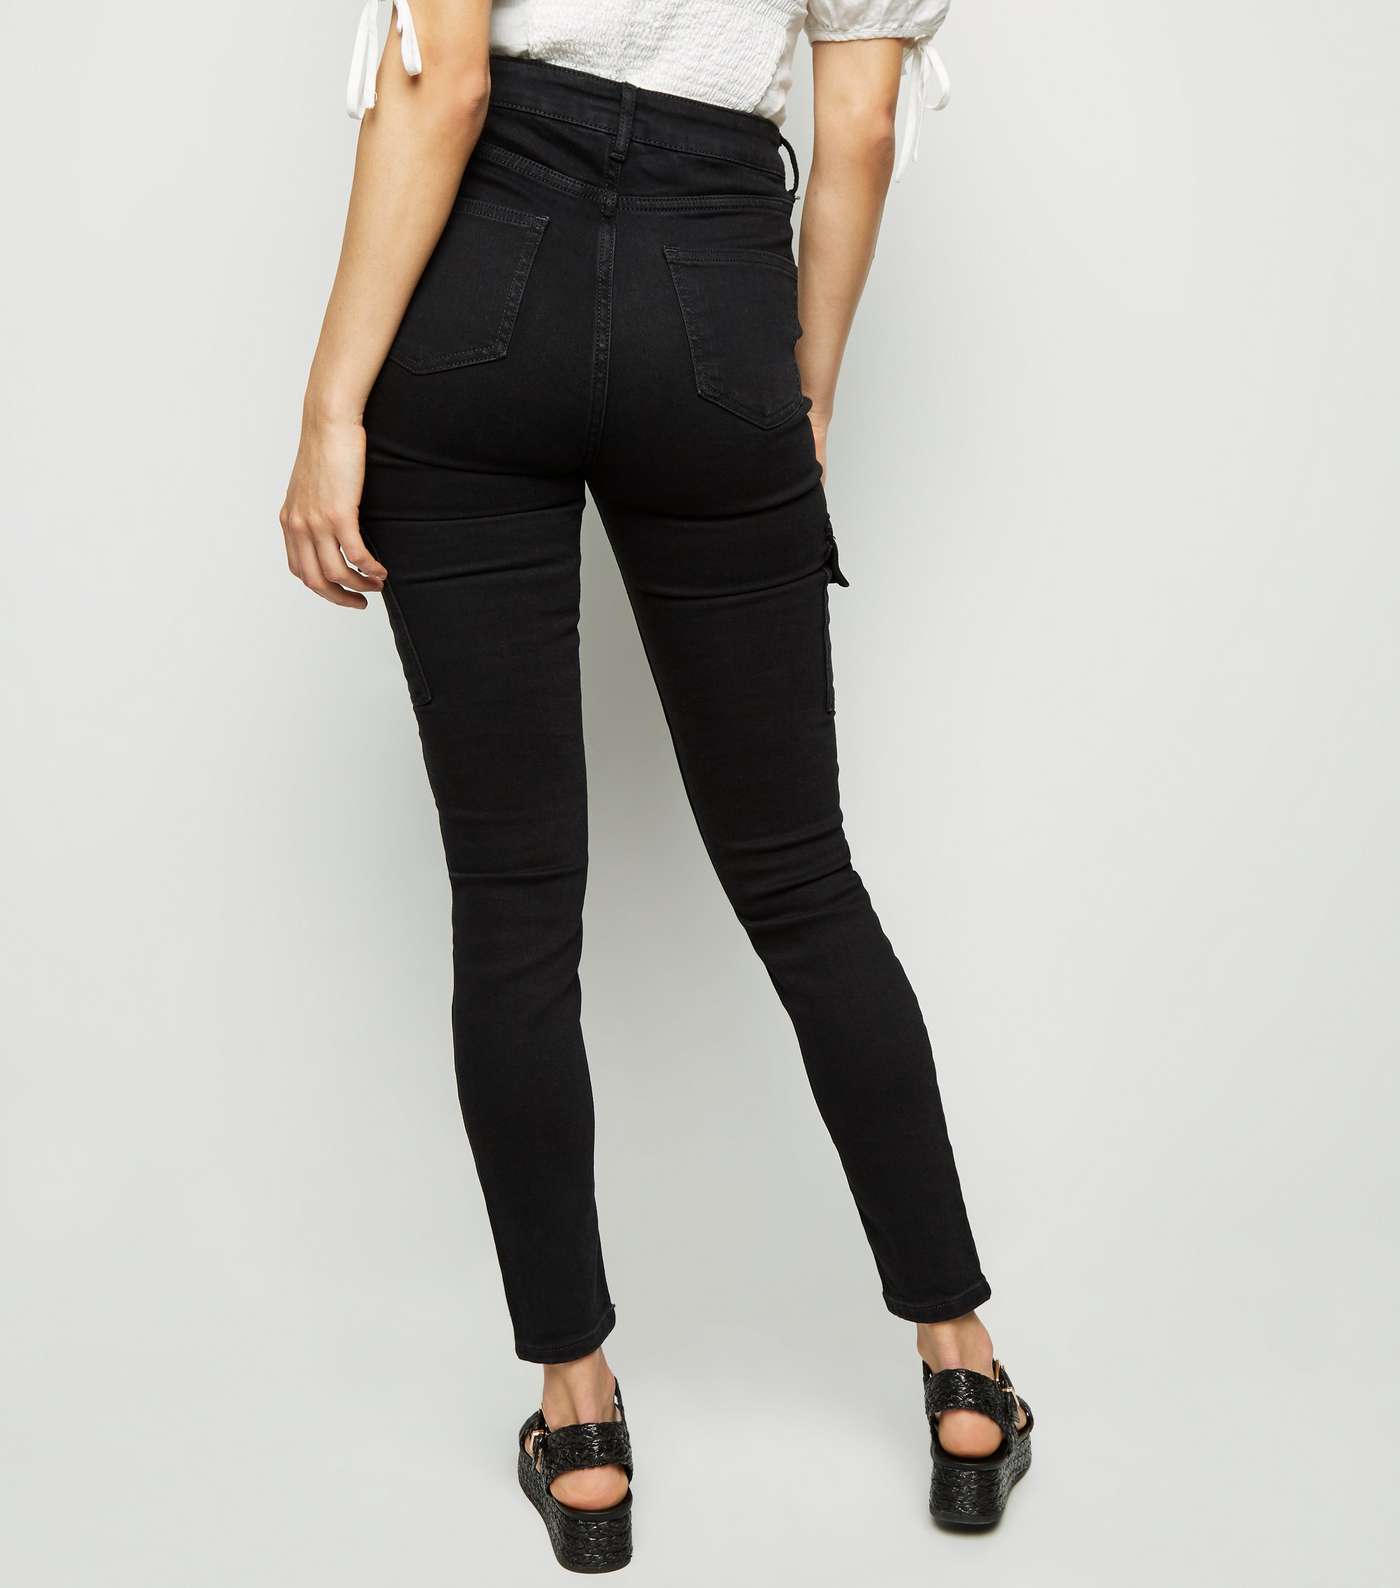 Black Utility Pocket Skinny Jenna Jeans Image 3